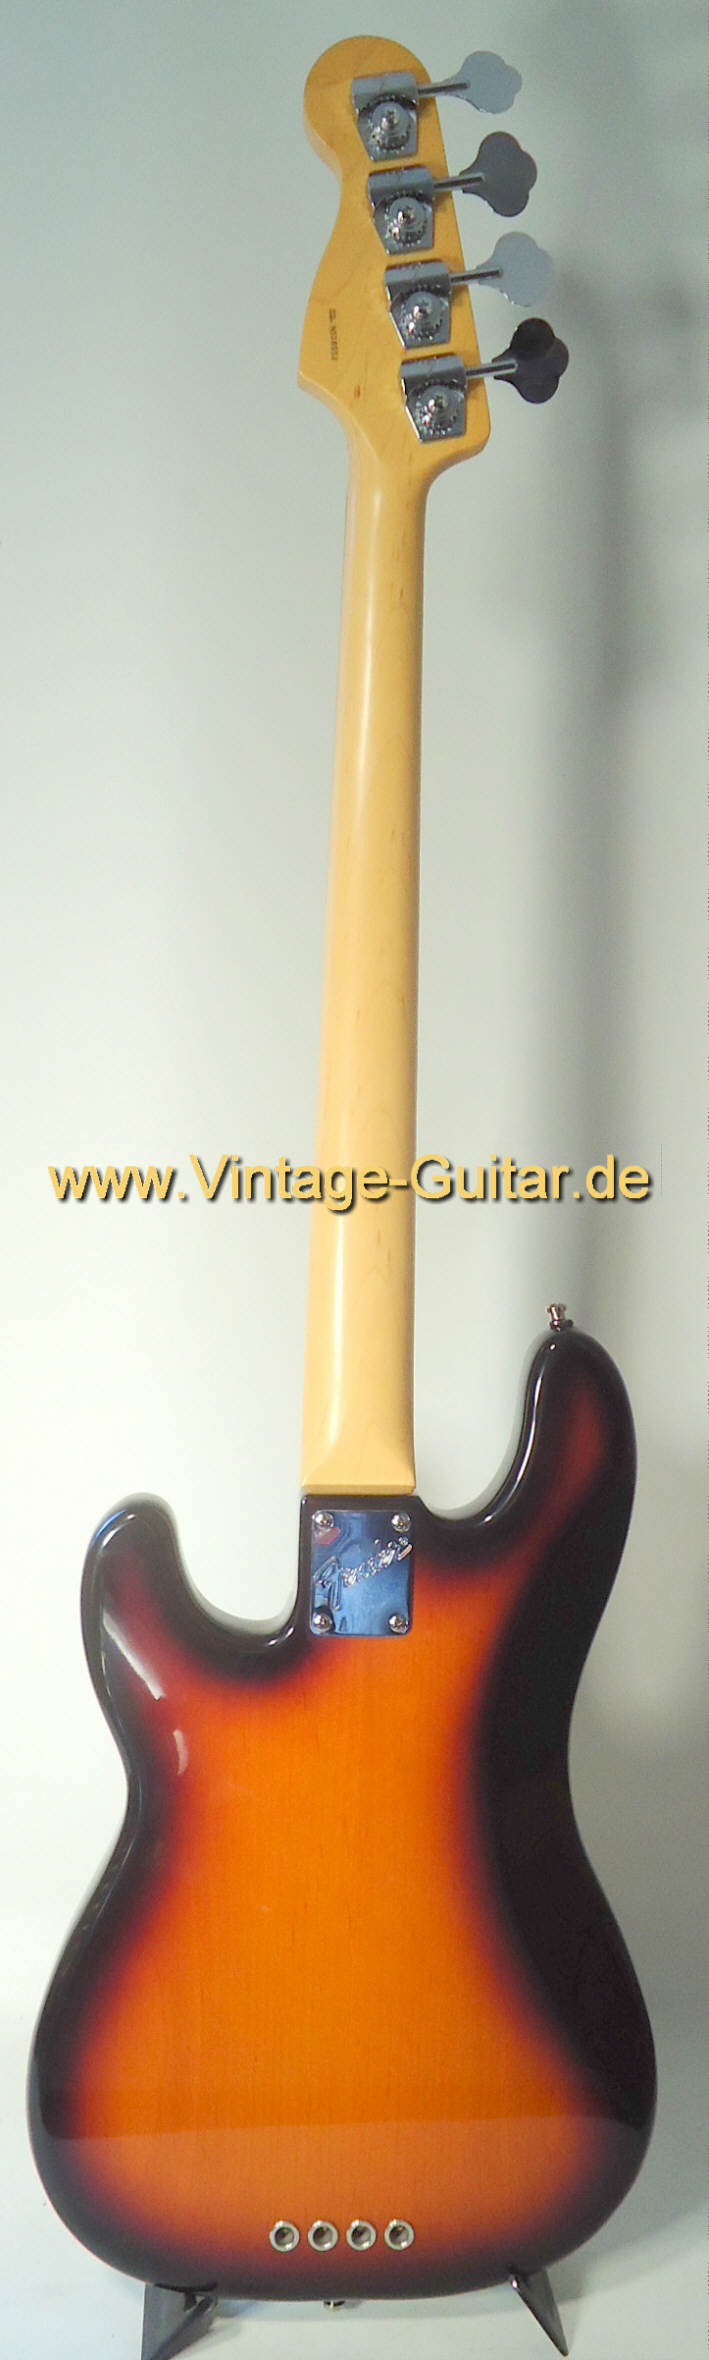 Fender-Precision-Bass-1995-sunburst-b.jpg